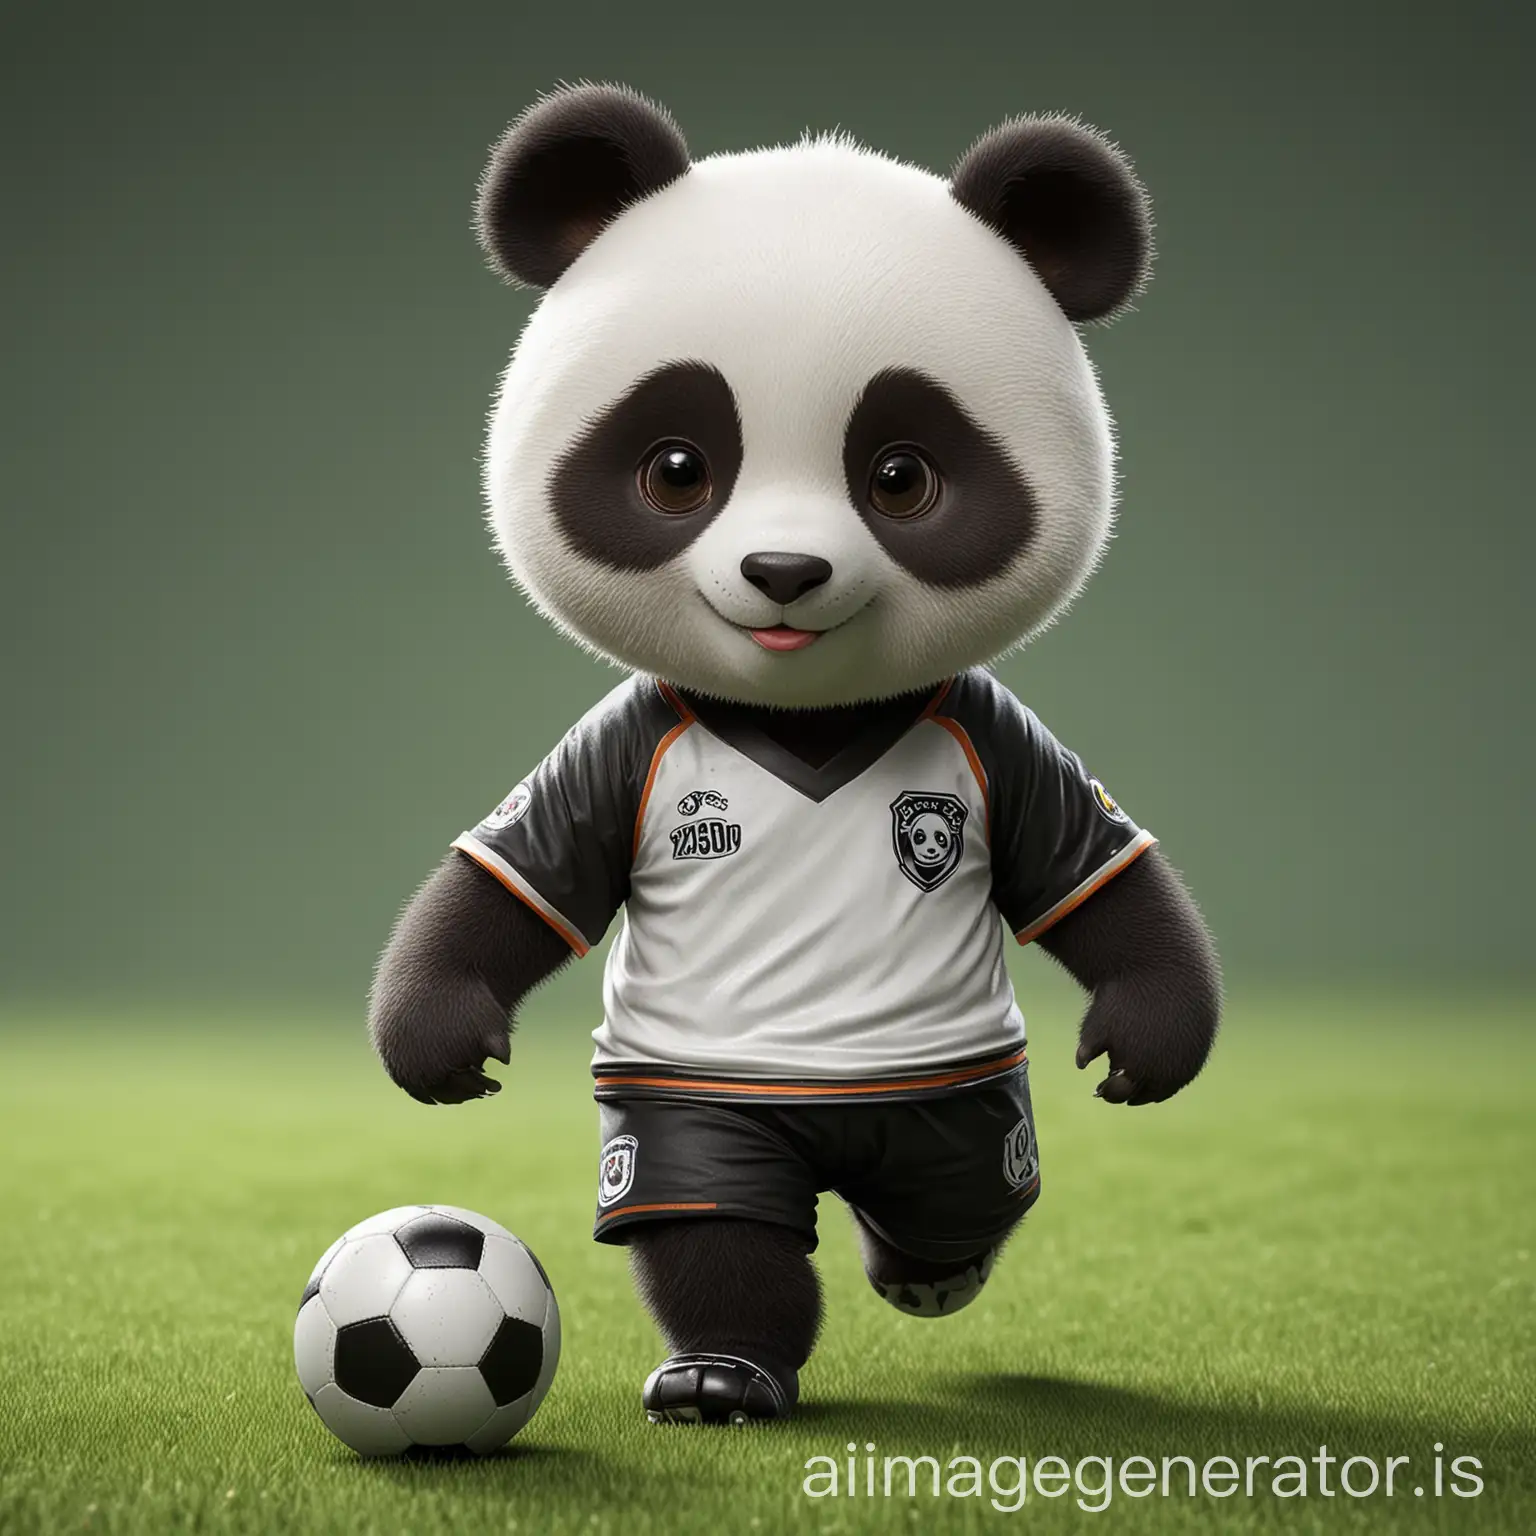 3D-Cute-Panda-Soccer-Player-in-Game-Attire-Walking